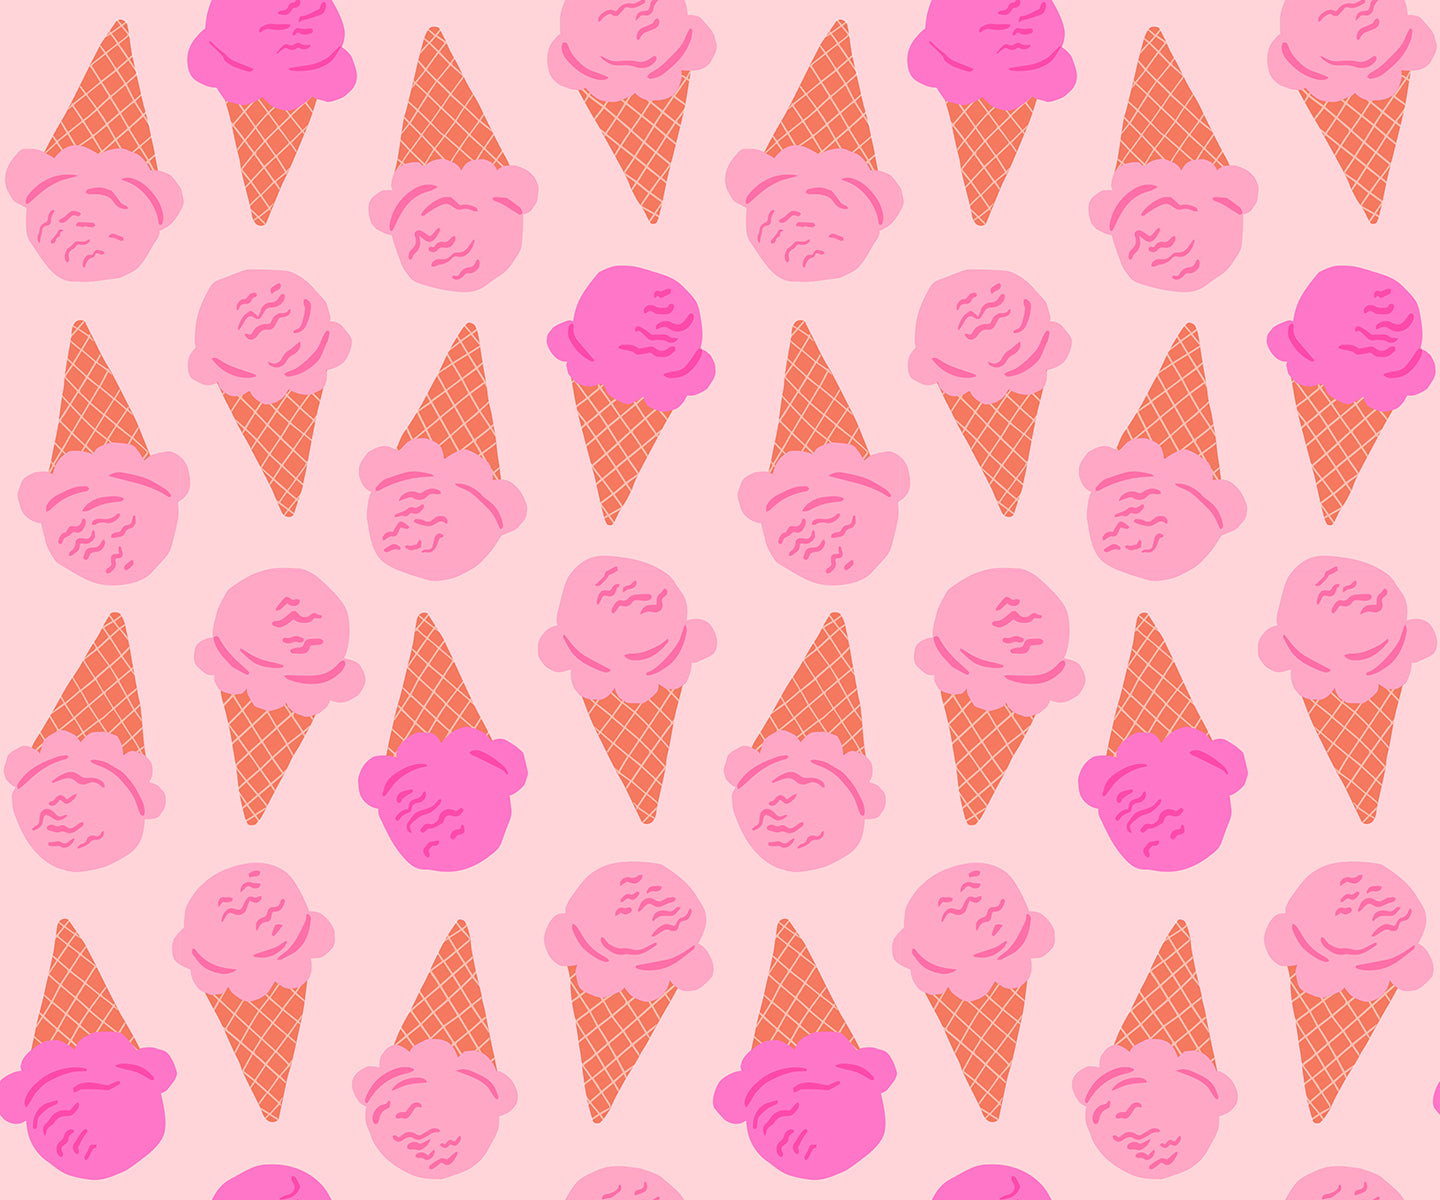 Sugar Cone in Cotton Candy Pink - Sugar Cone